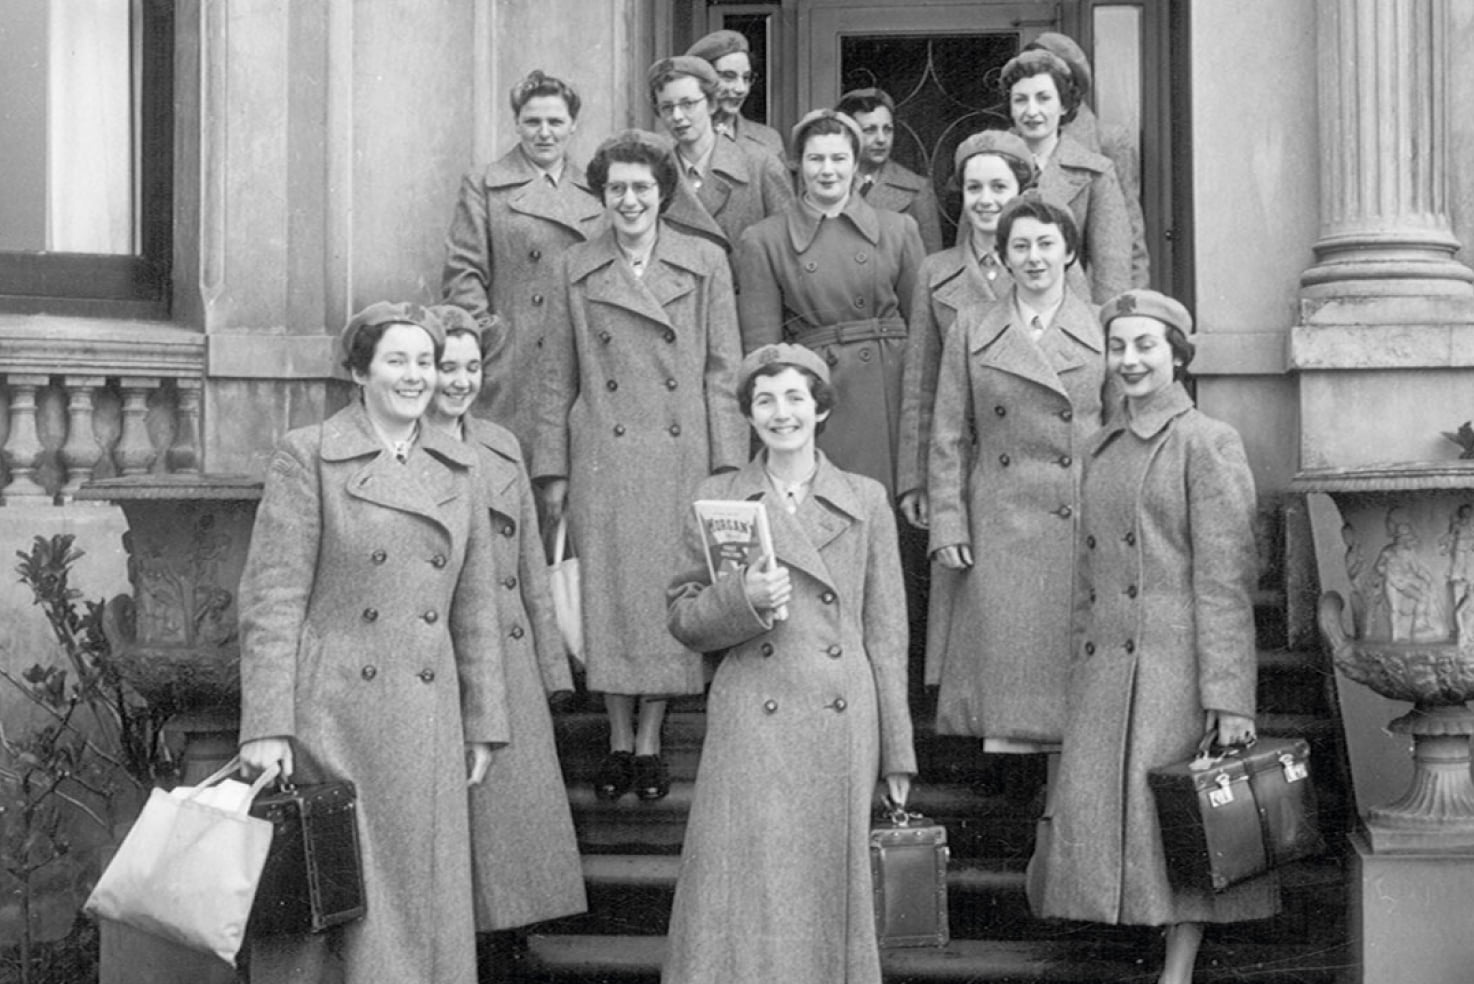 Historic image of RDNS nurses